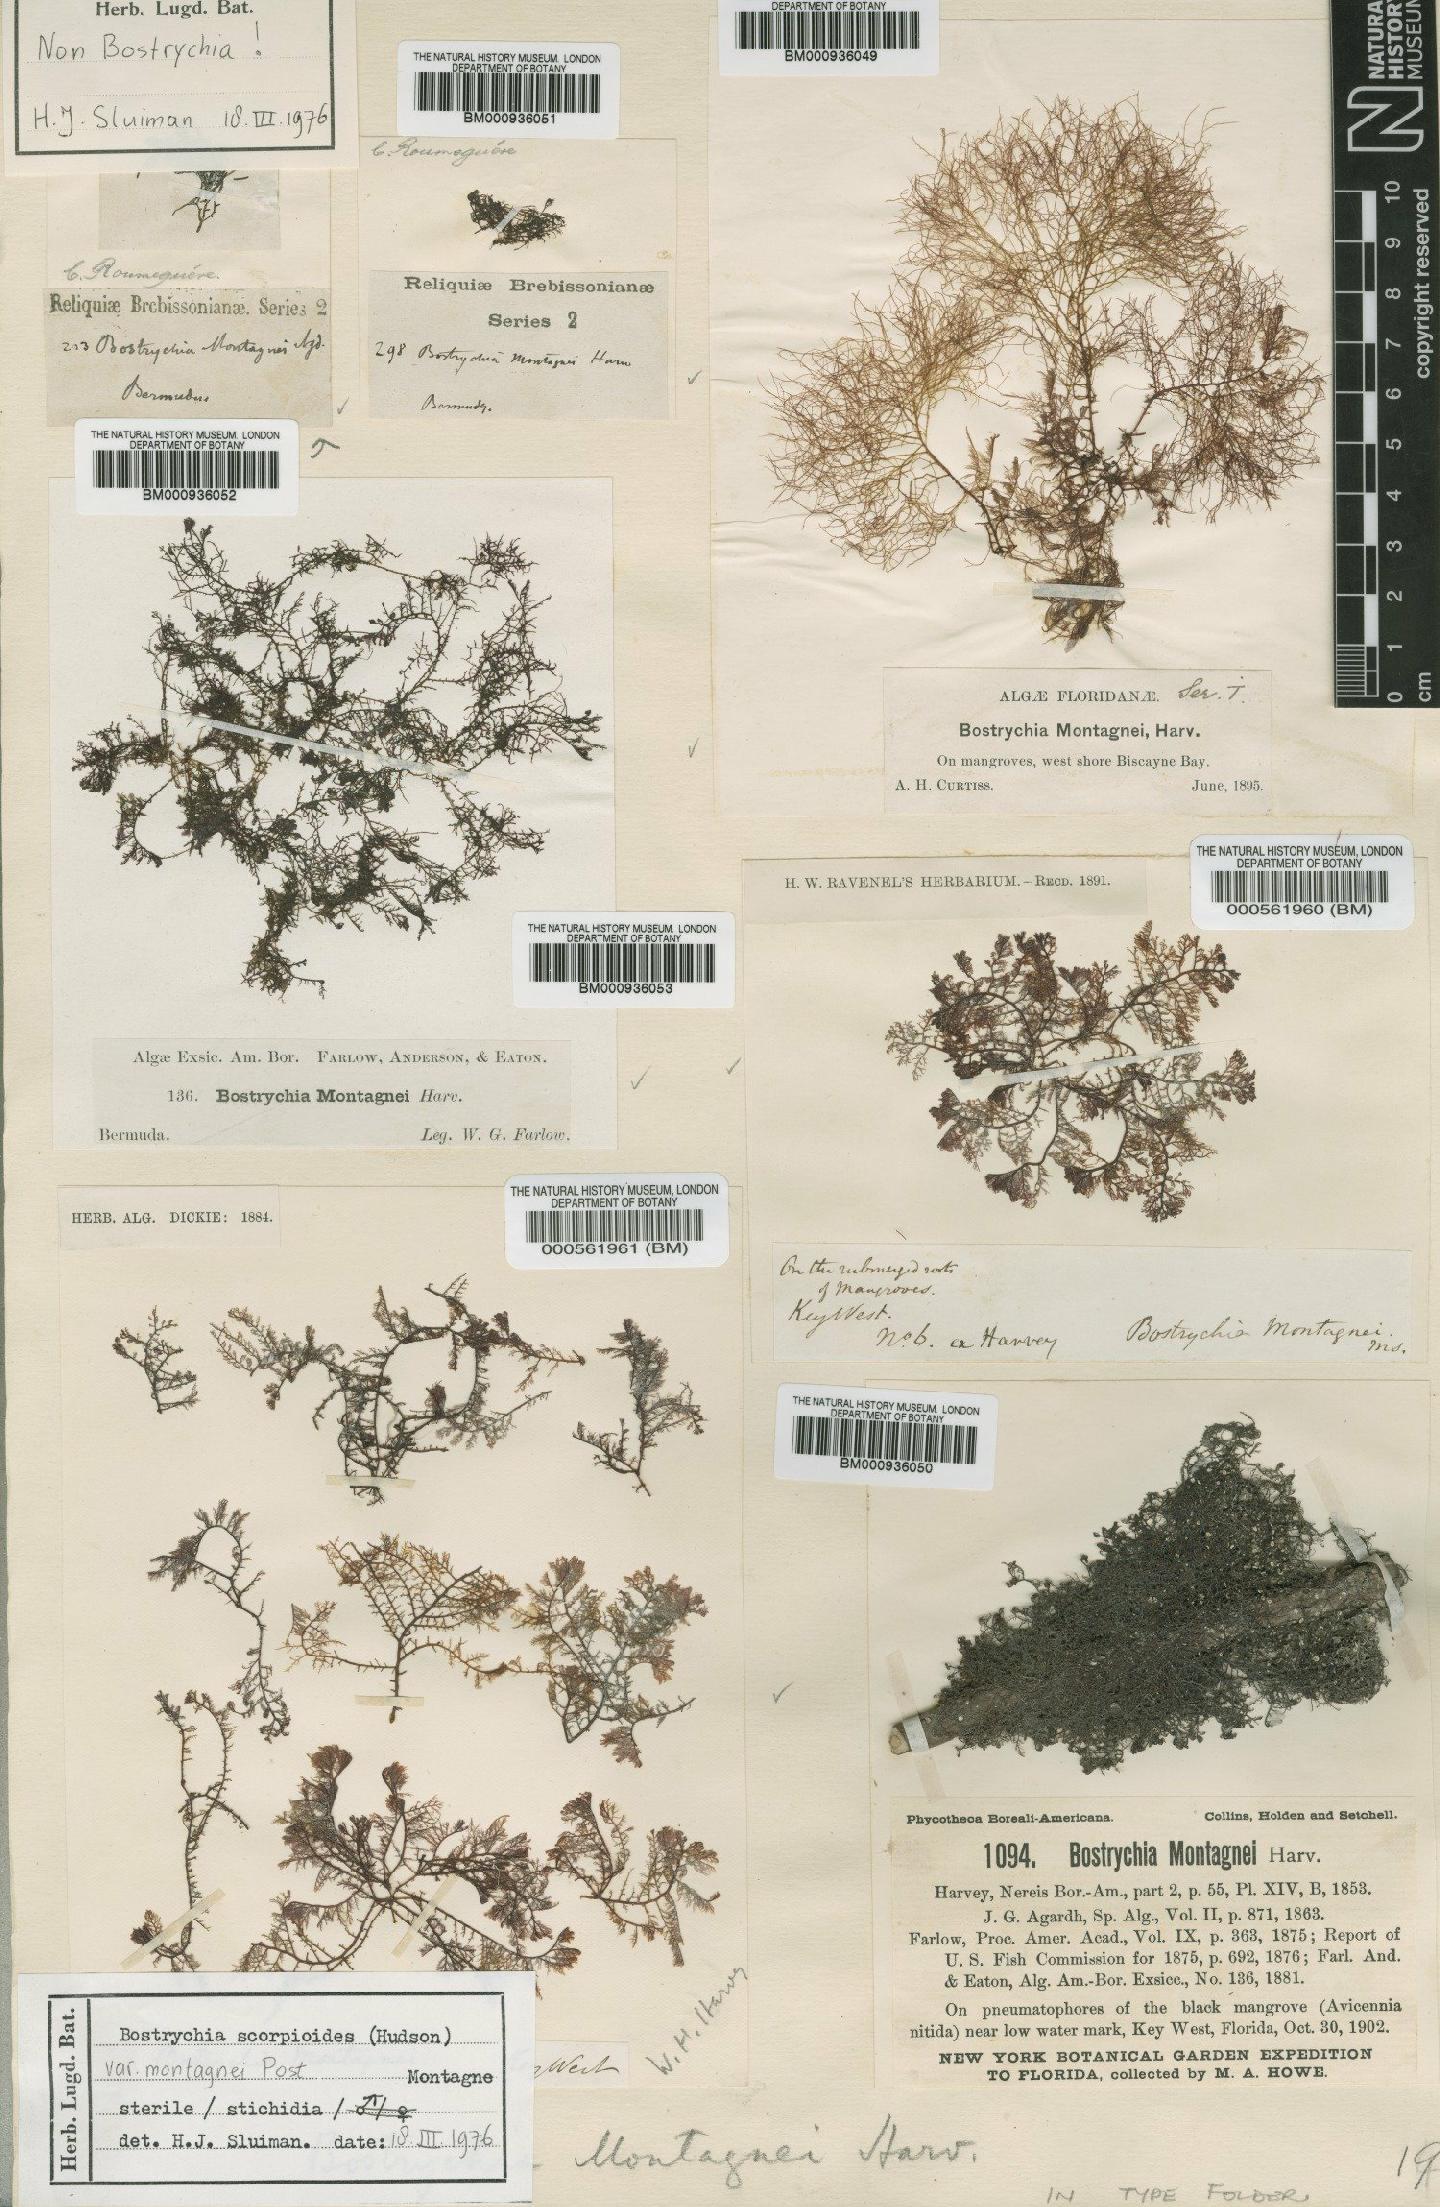 To NHMUK collection (Bostrychia montagnei Harvey; Type; NHMUK:ecatalogue:432529)